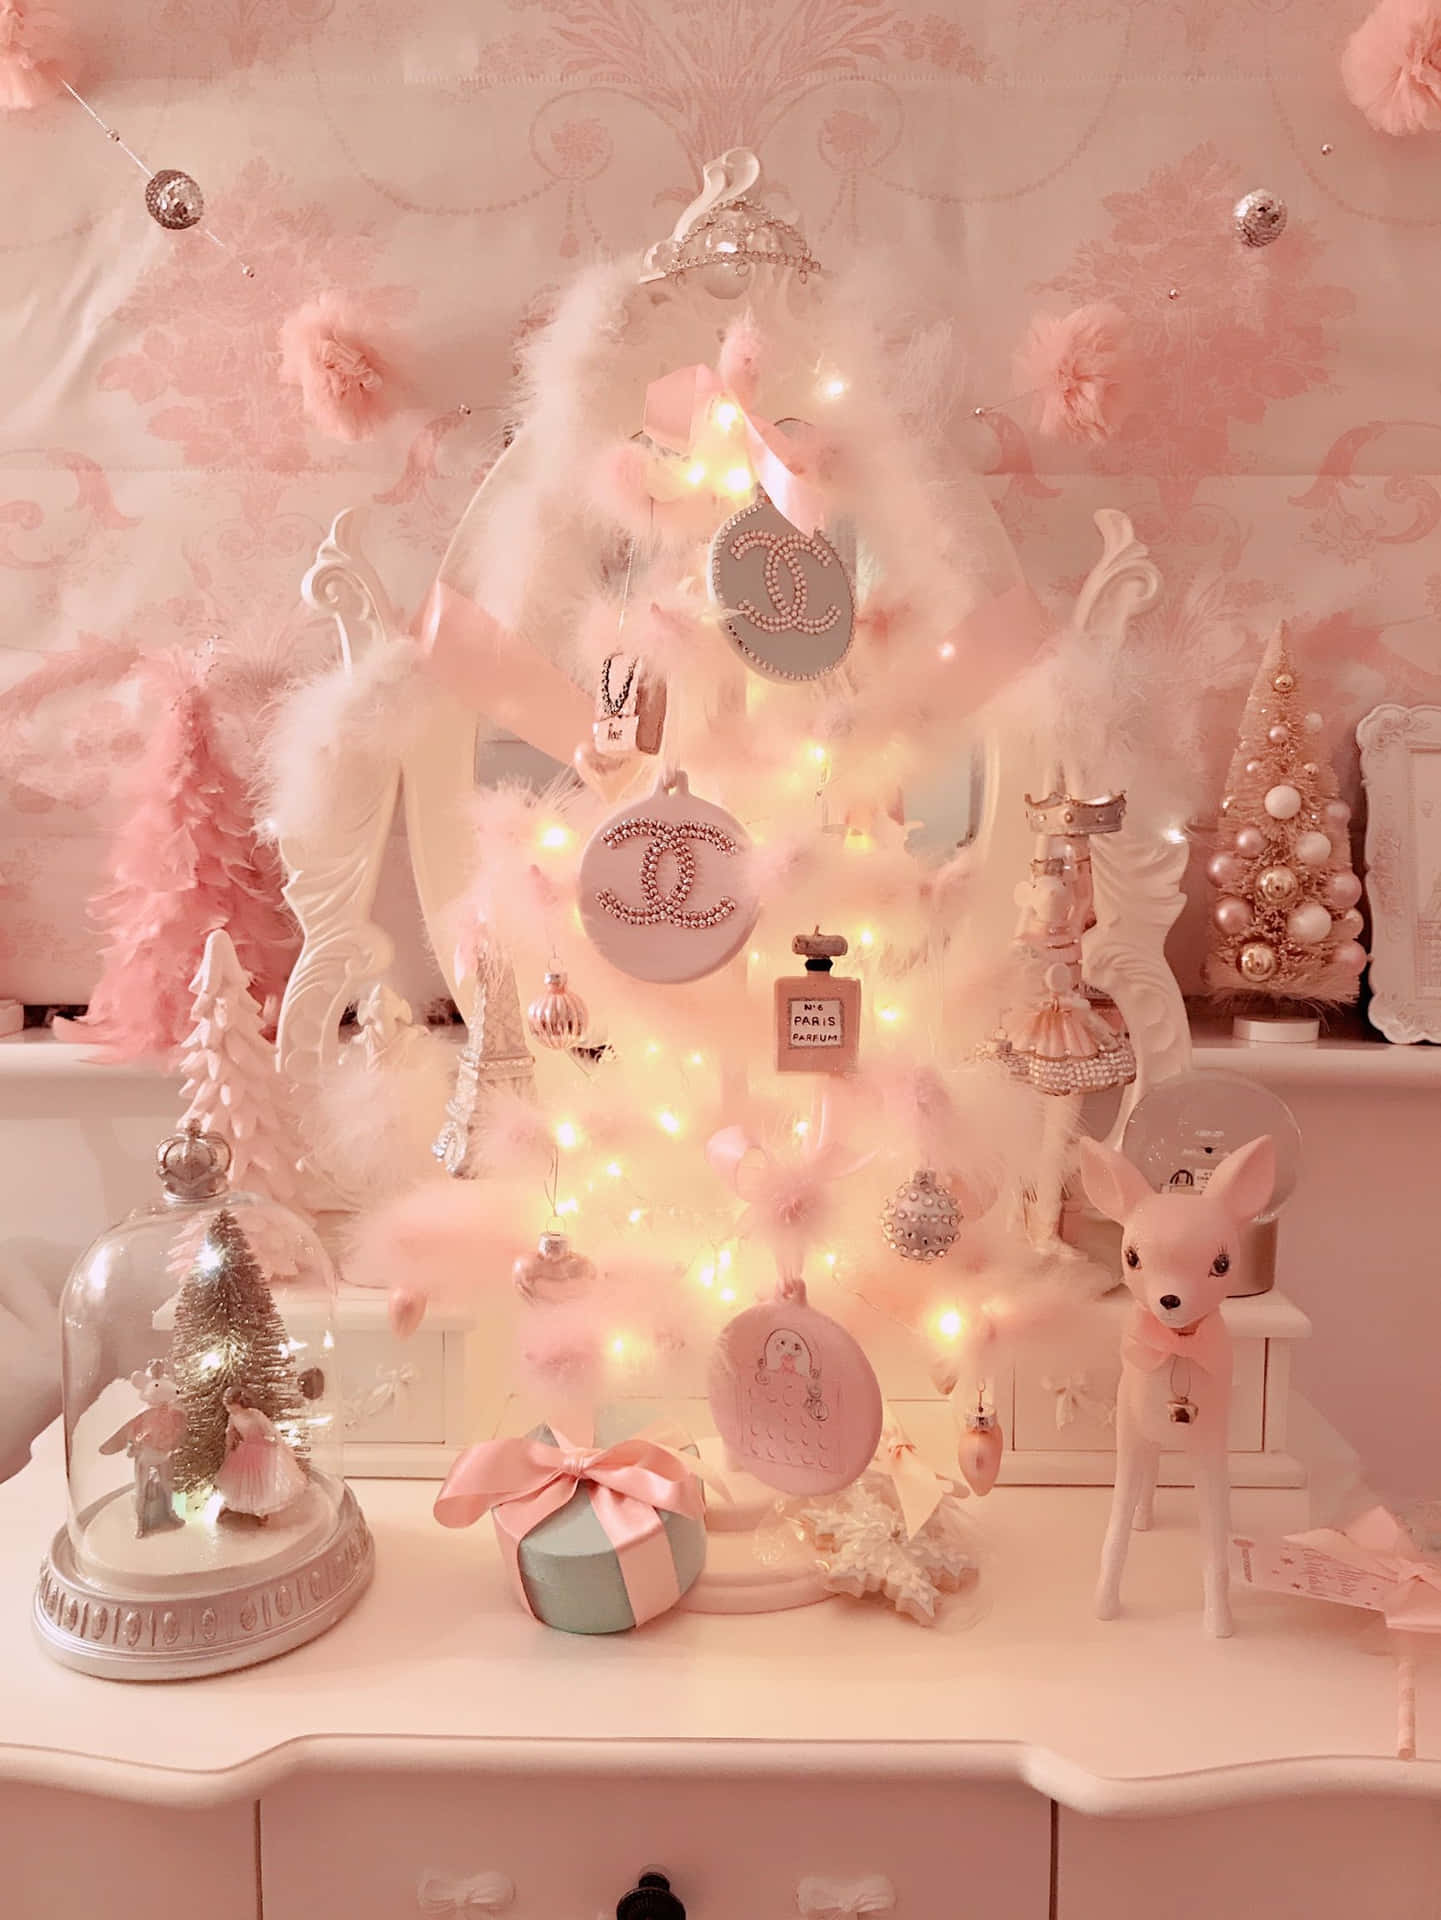 Etsmukt Pink Juletræ Spreder Julestemning I Ethvert Hjem. Wallpaper